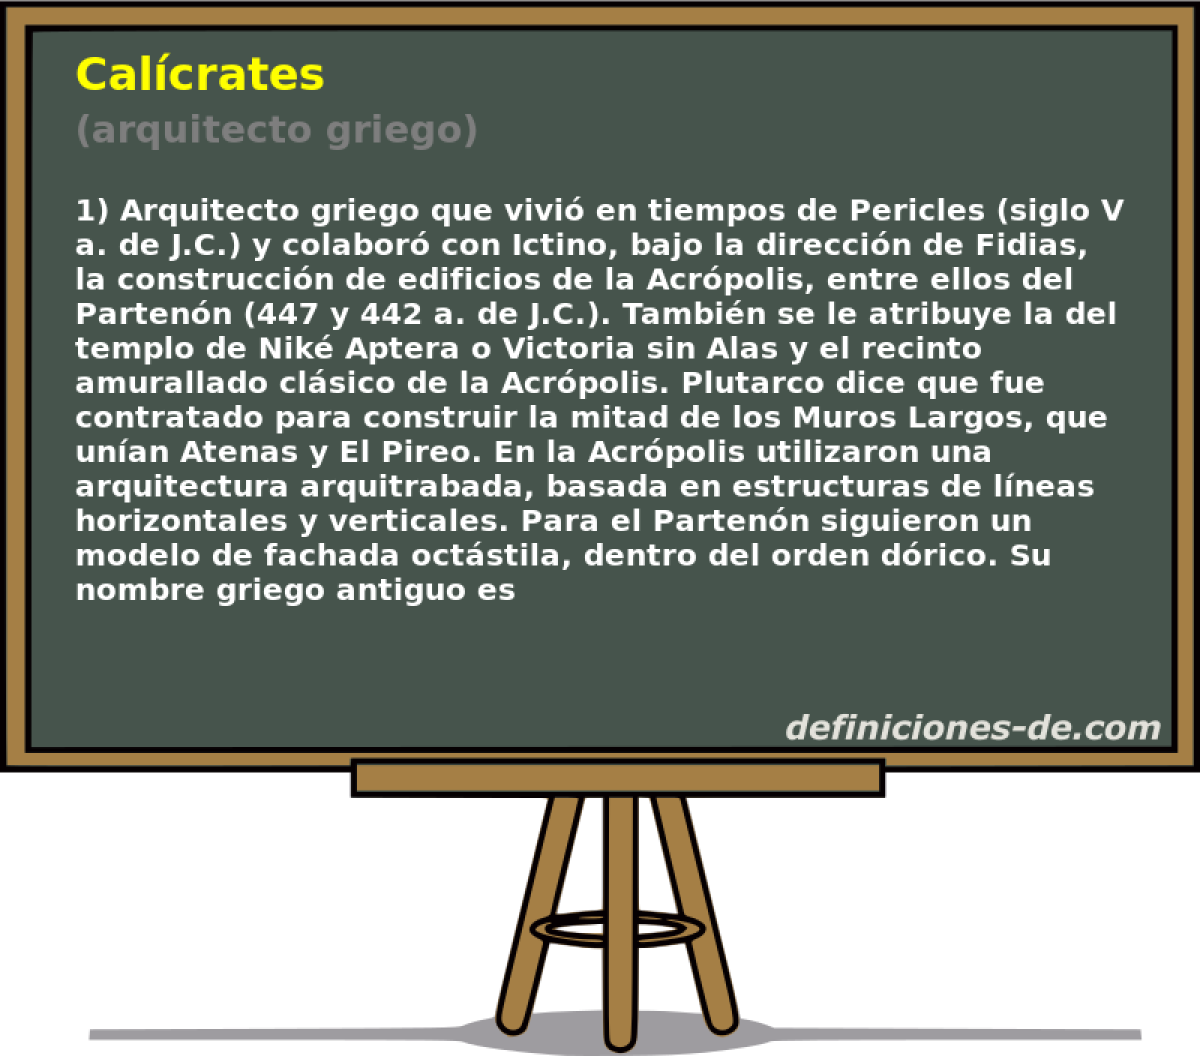 Calcrates (arquitecto griego)